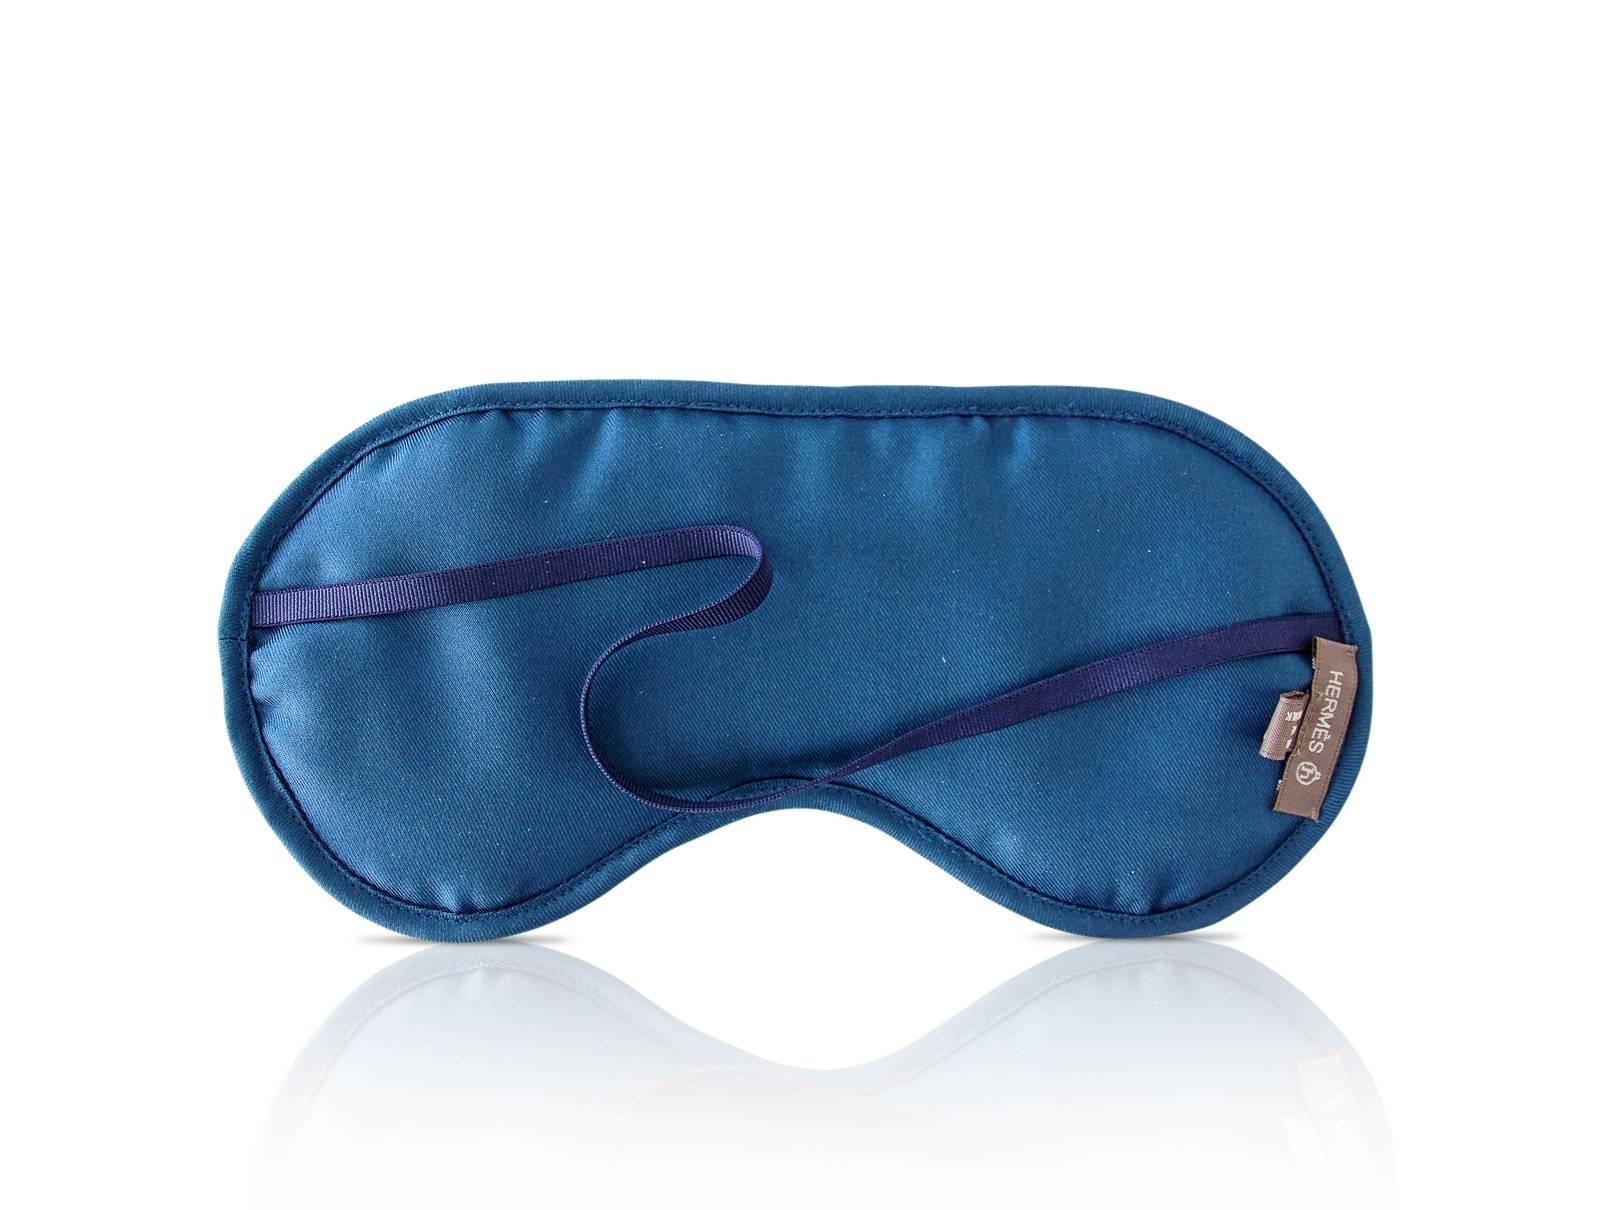 Bleu Masque Sleep Eye d'Hermès en soie multicolore avec plumes vibrantes, neuf dans sa boîte en vente